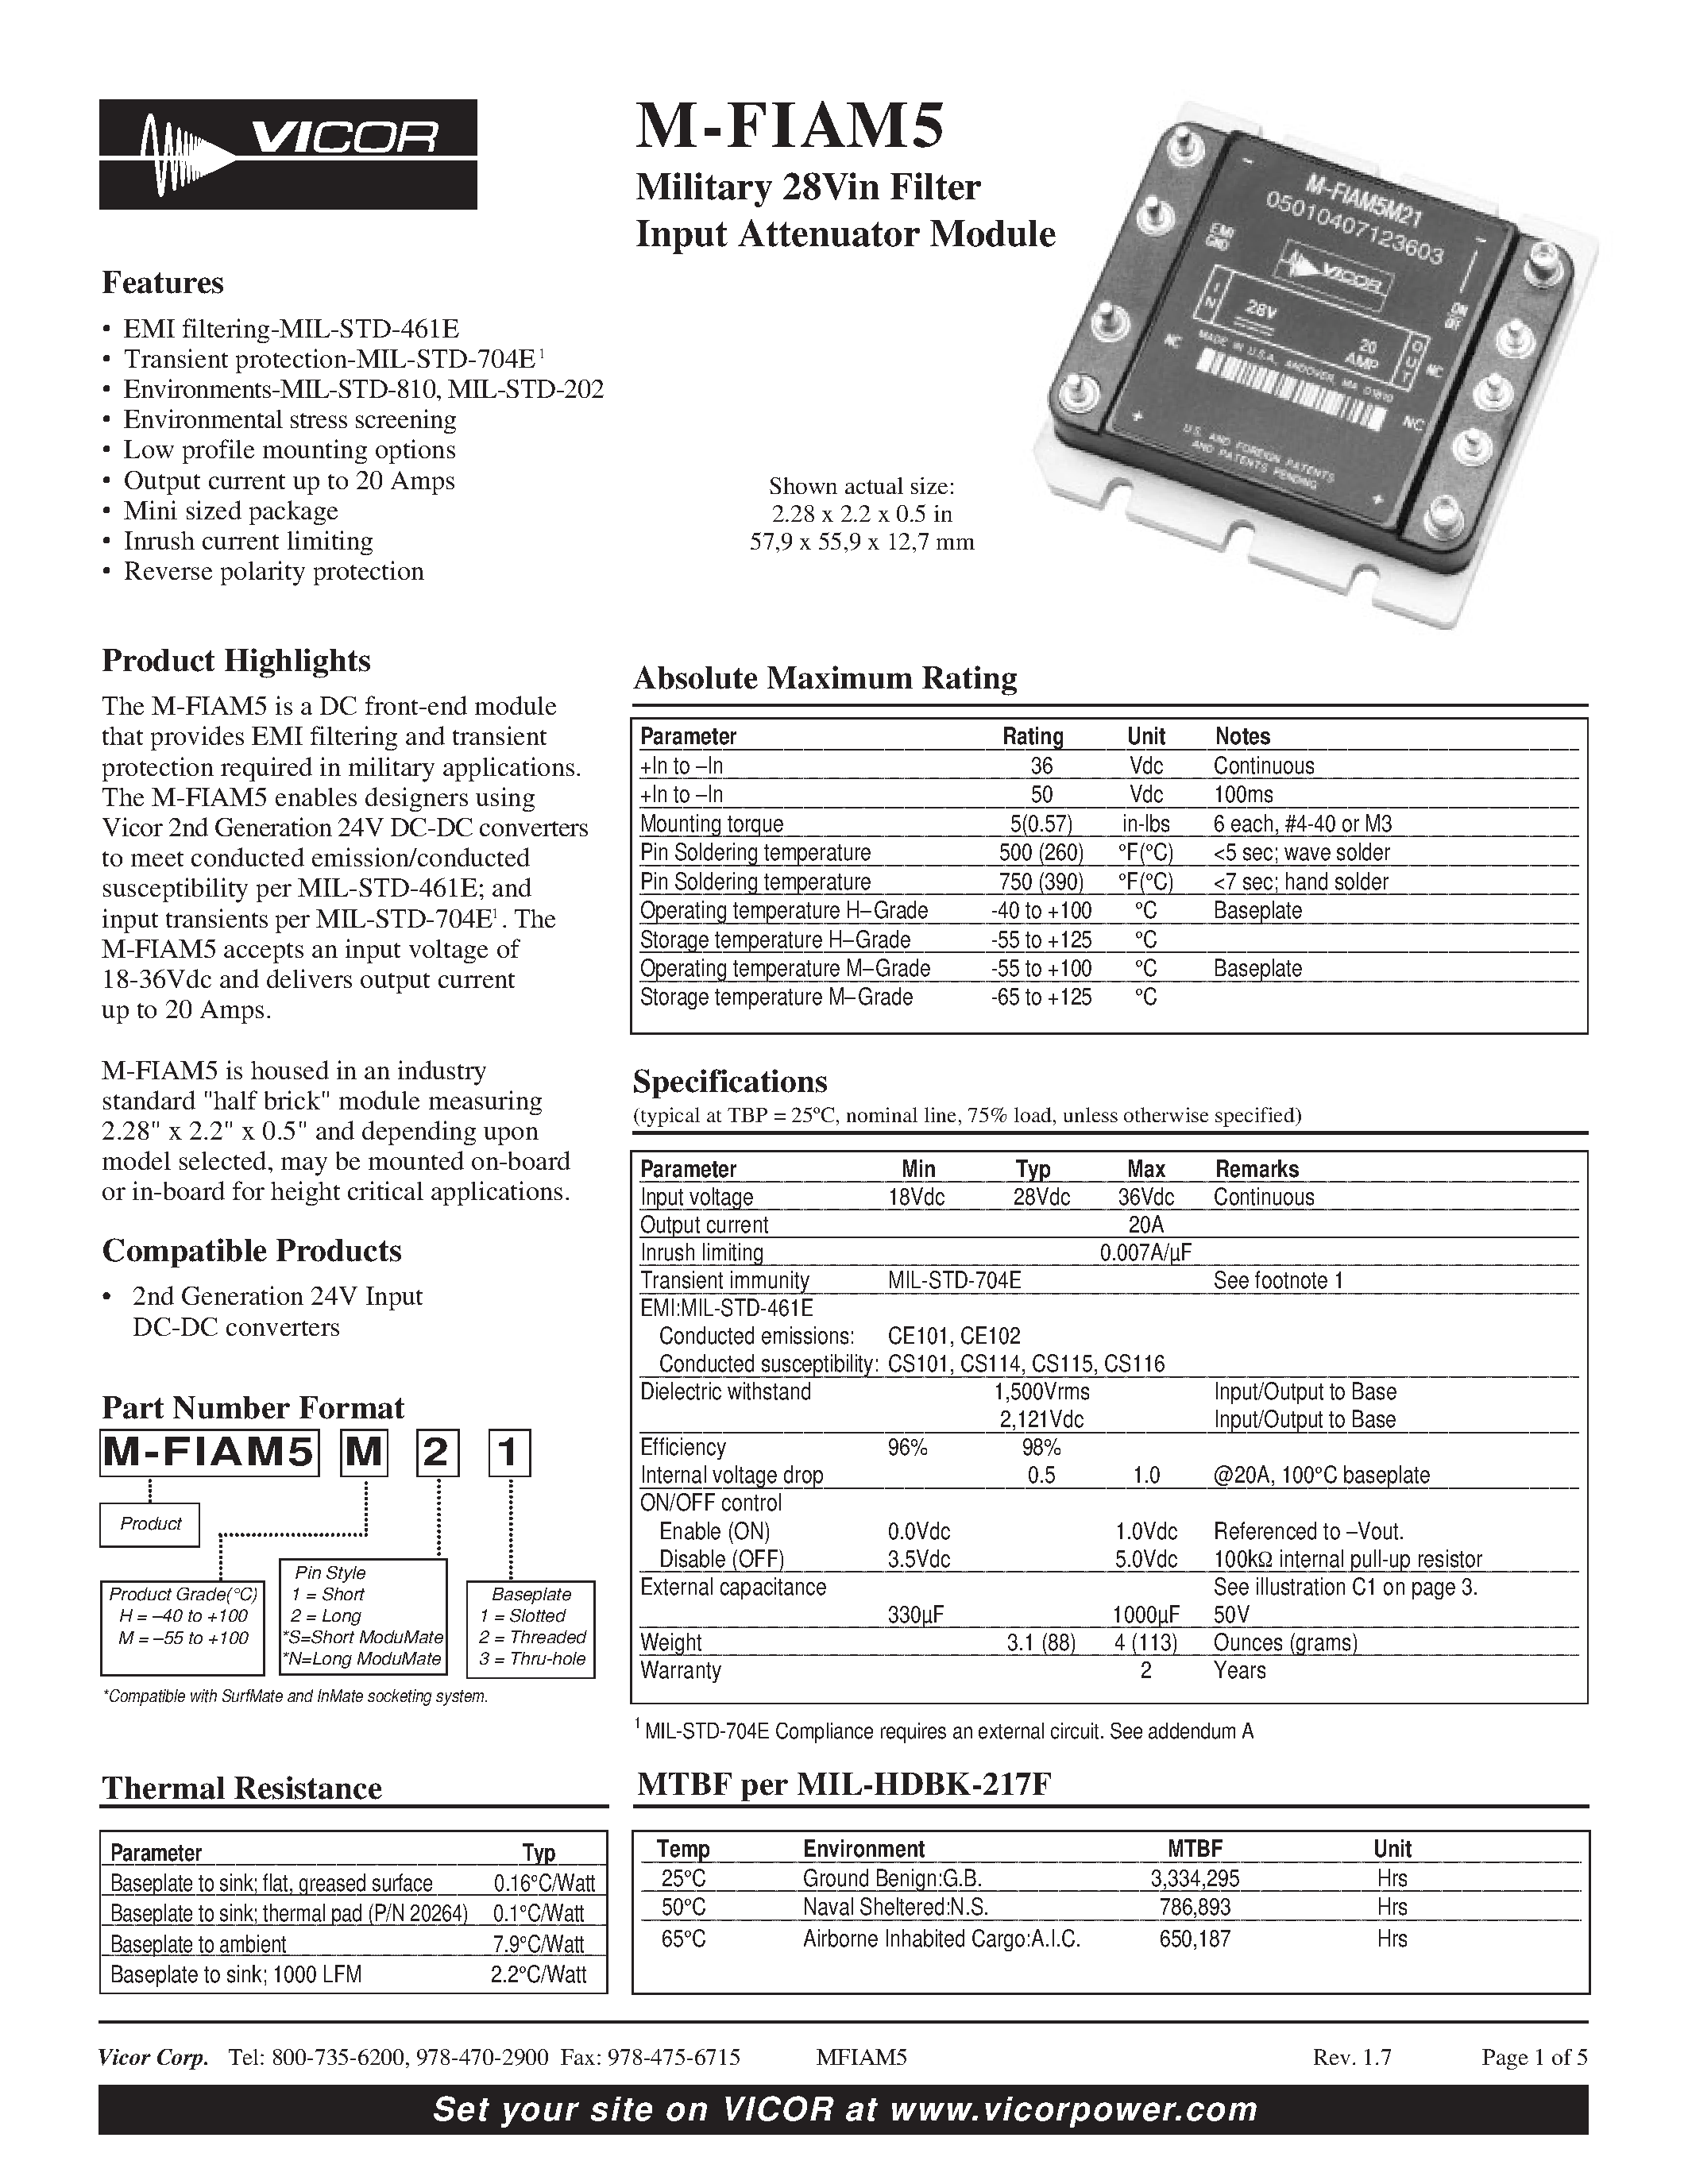 Datasheet M-FIAM5MS1 - Military 28Vin Filter Input Attenuator Module page 1